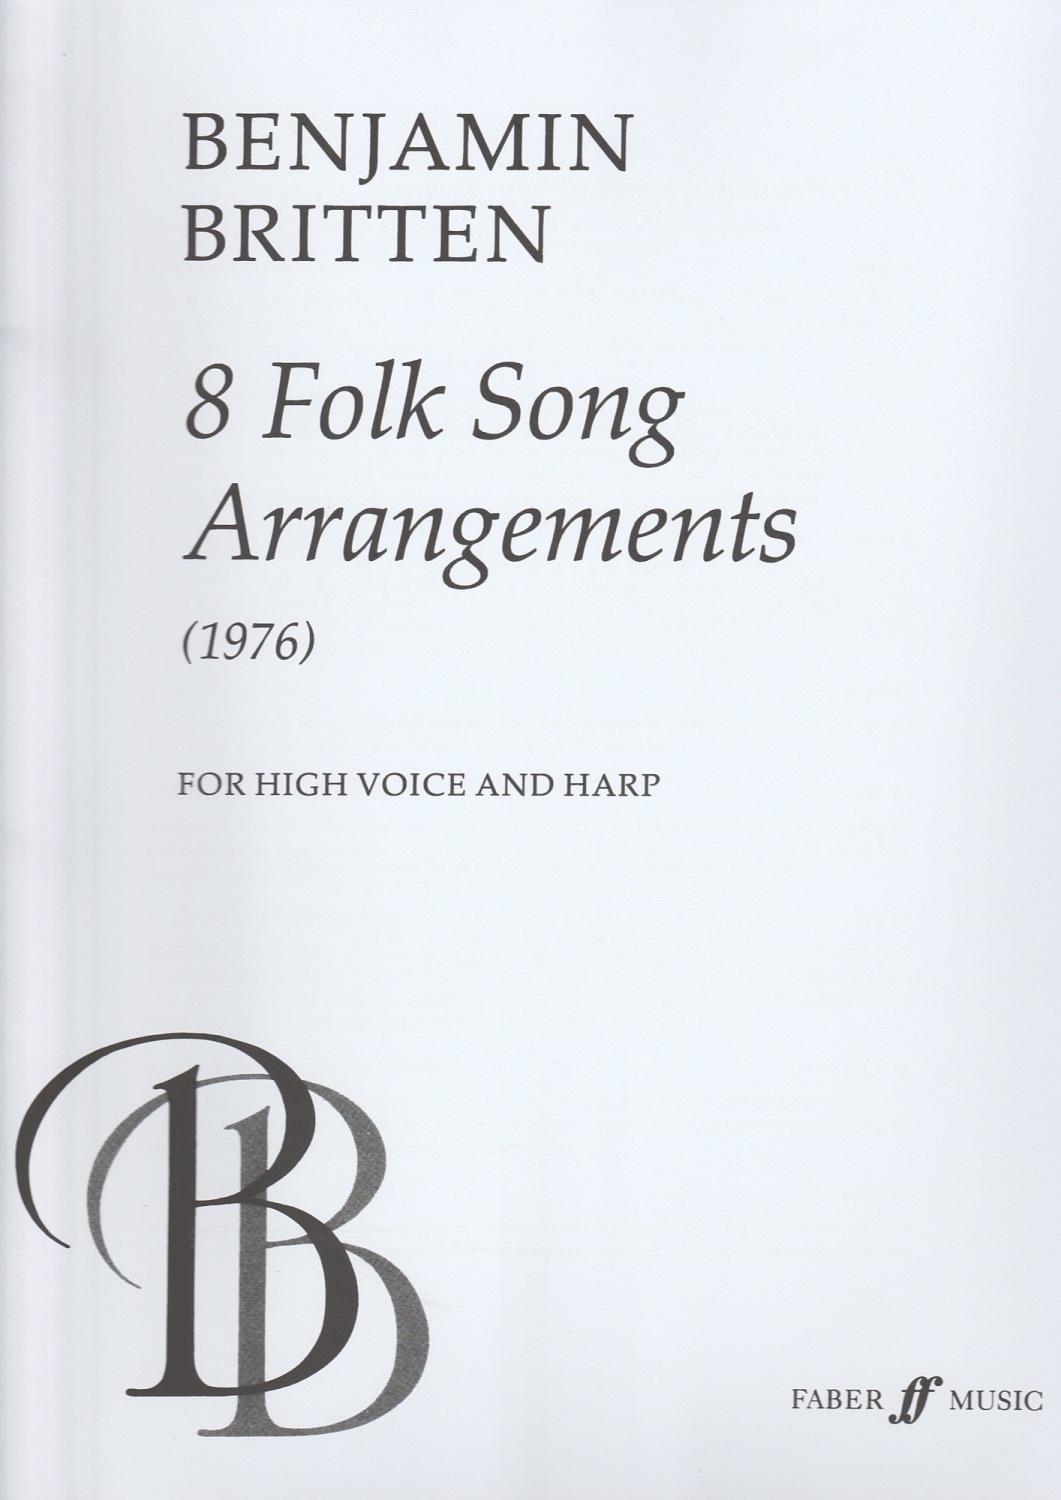 8 Folk Song Arrangements (1976) - Benjamin Britten